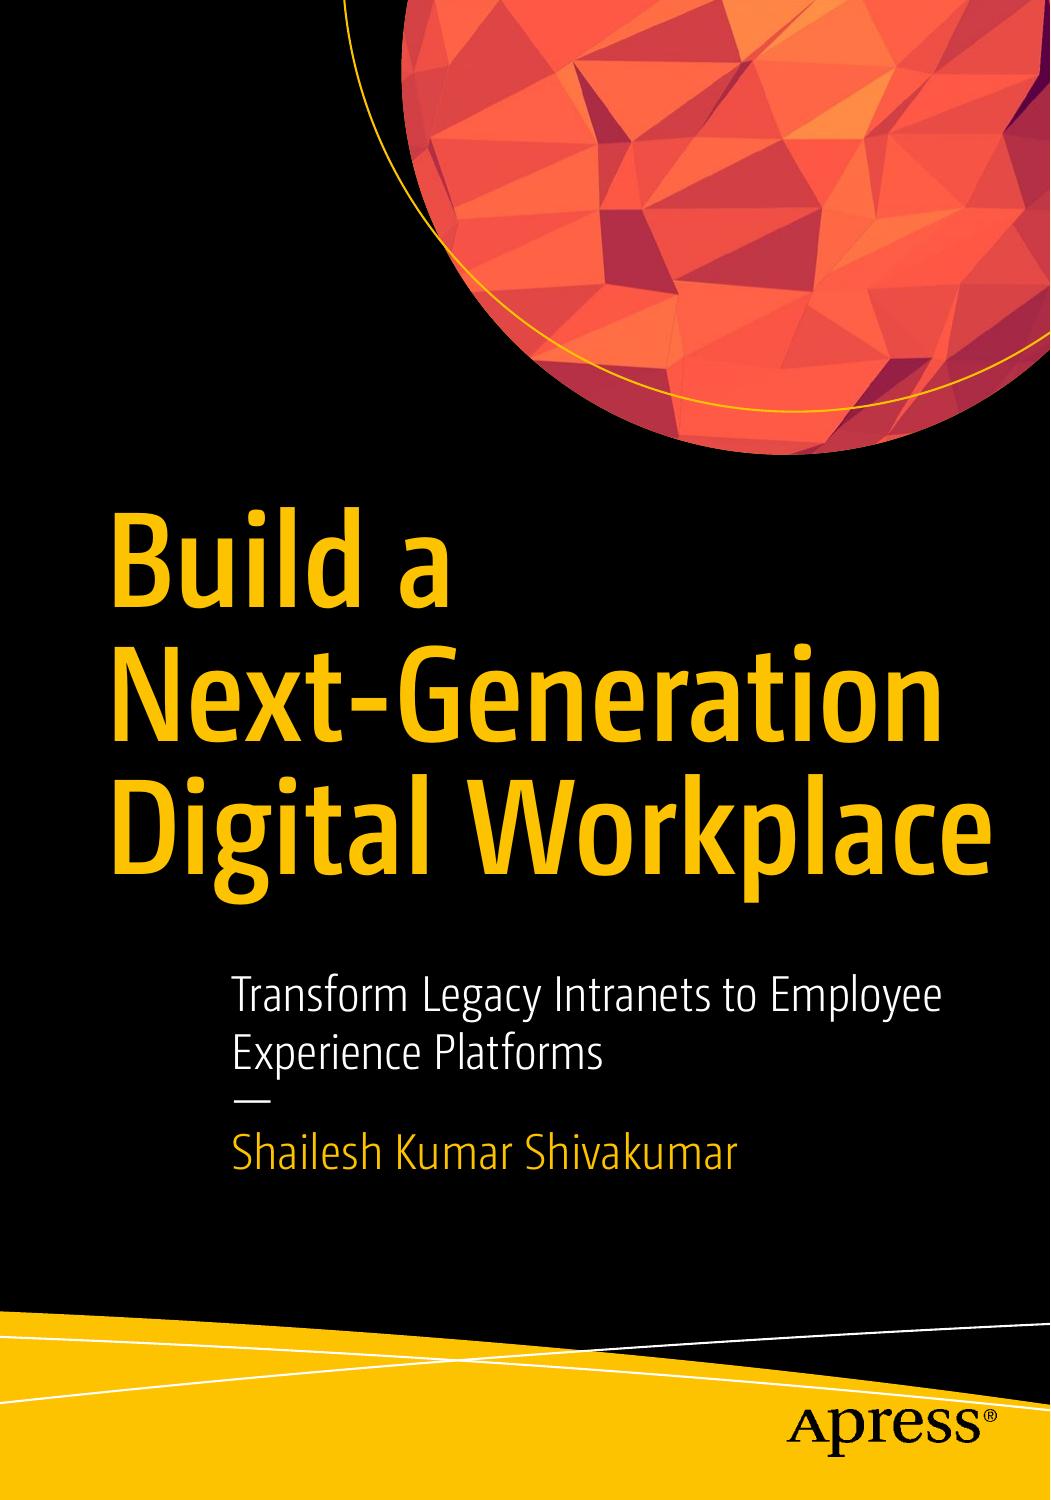 Build a Next-Generation Digital Workplace: Transform Legacy Intranets to Employee Experience Platforms by Shailesh Kumar Shivakumar